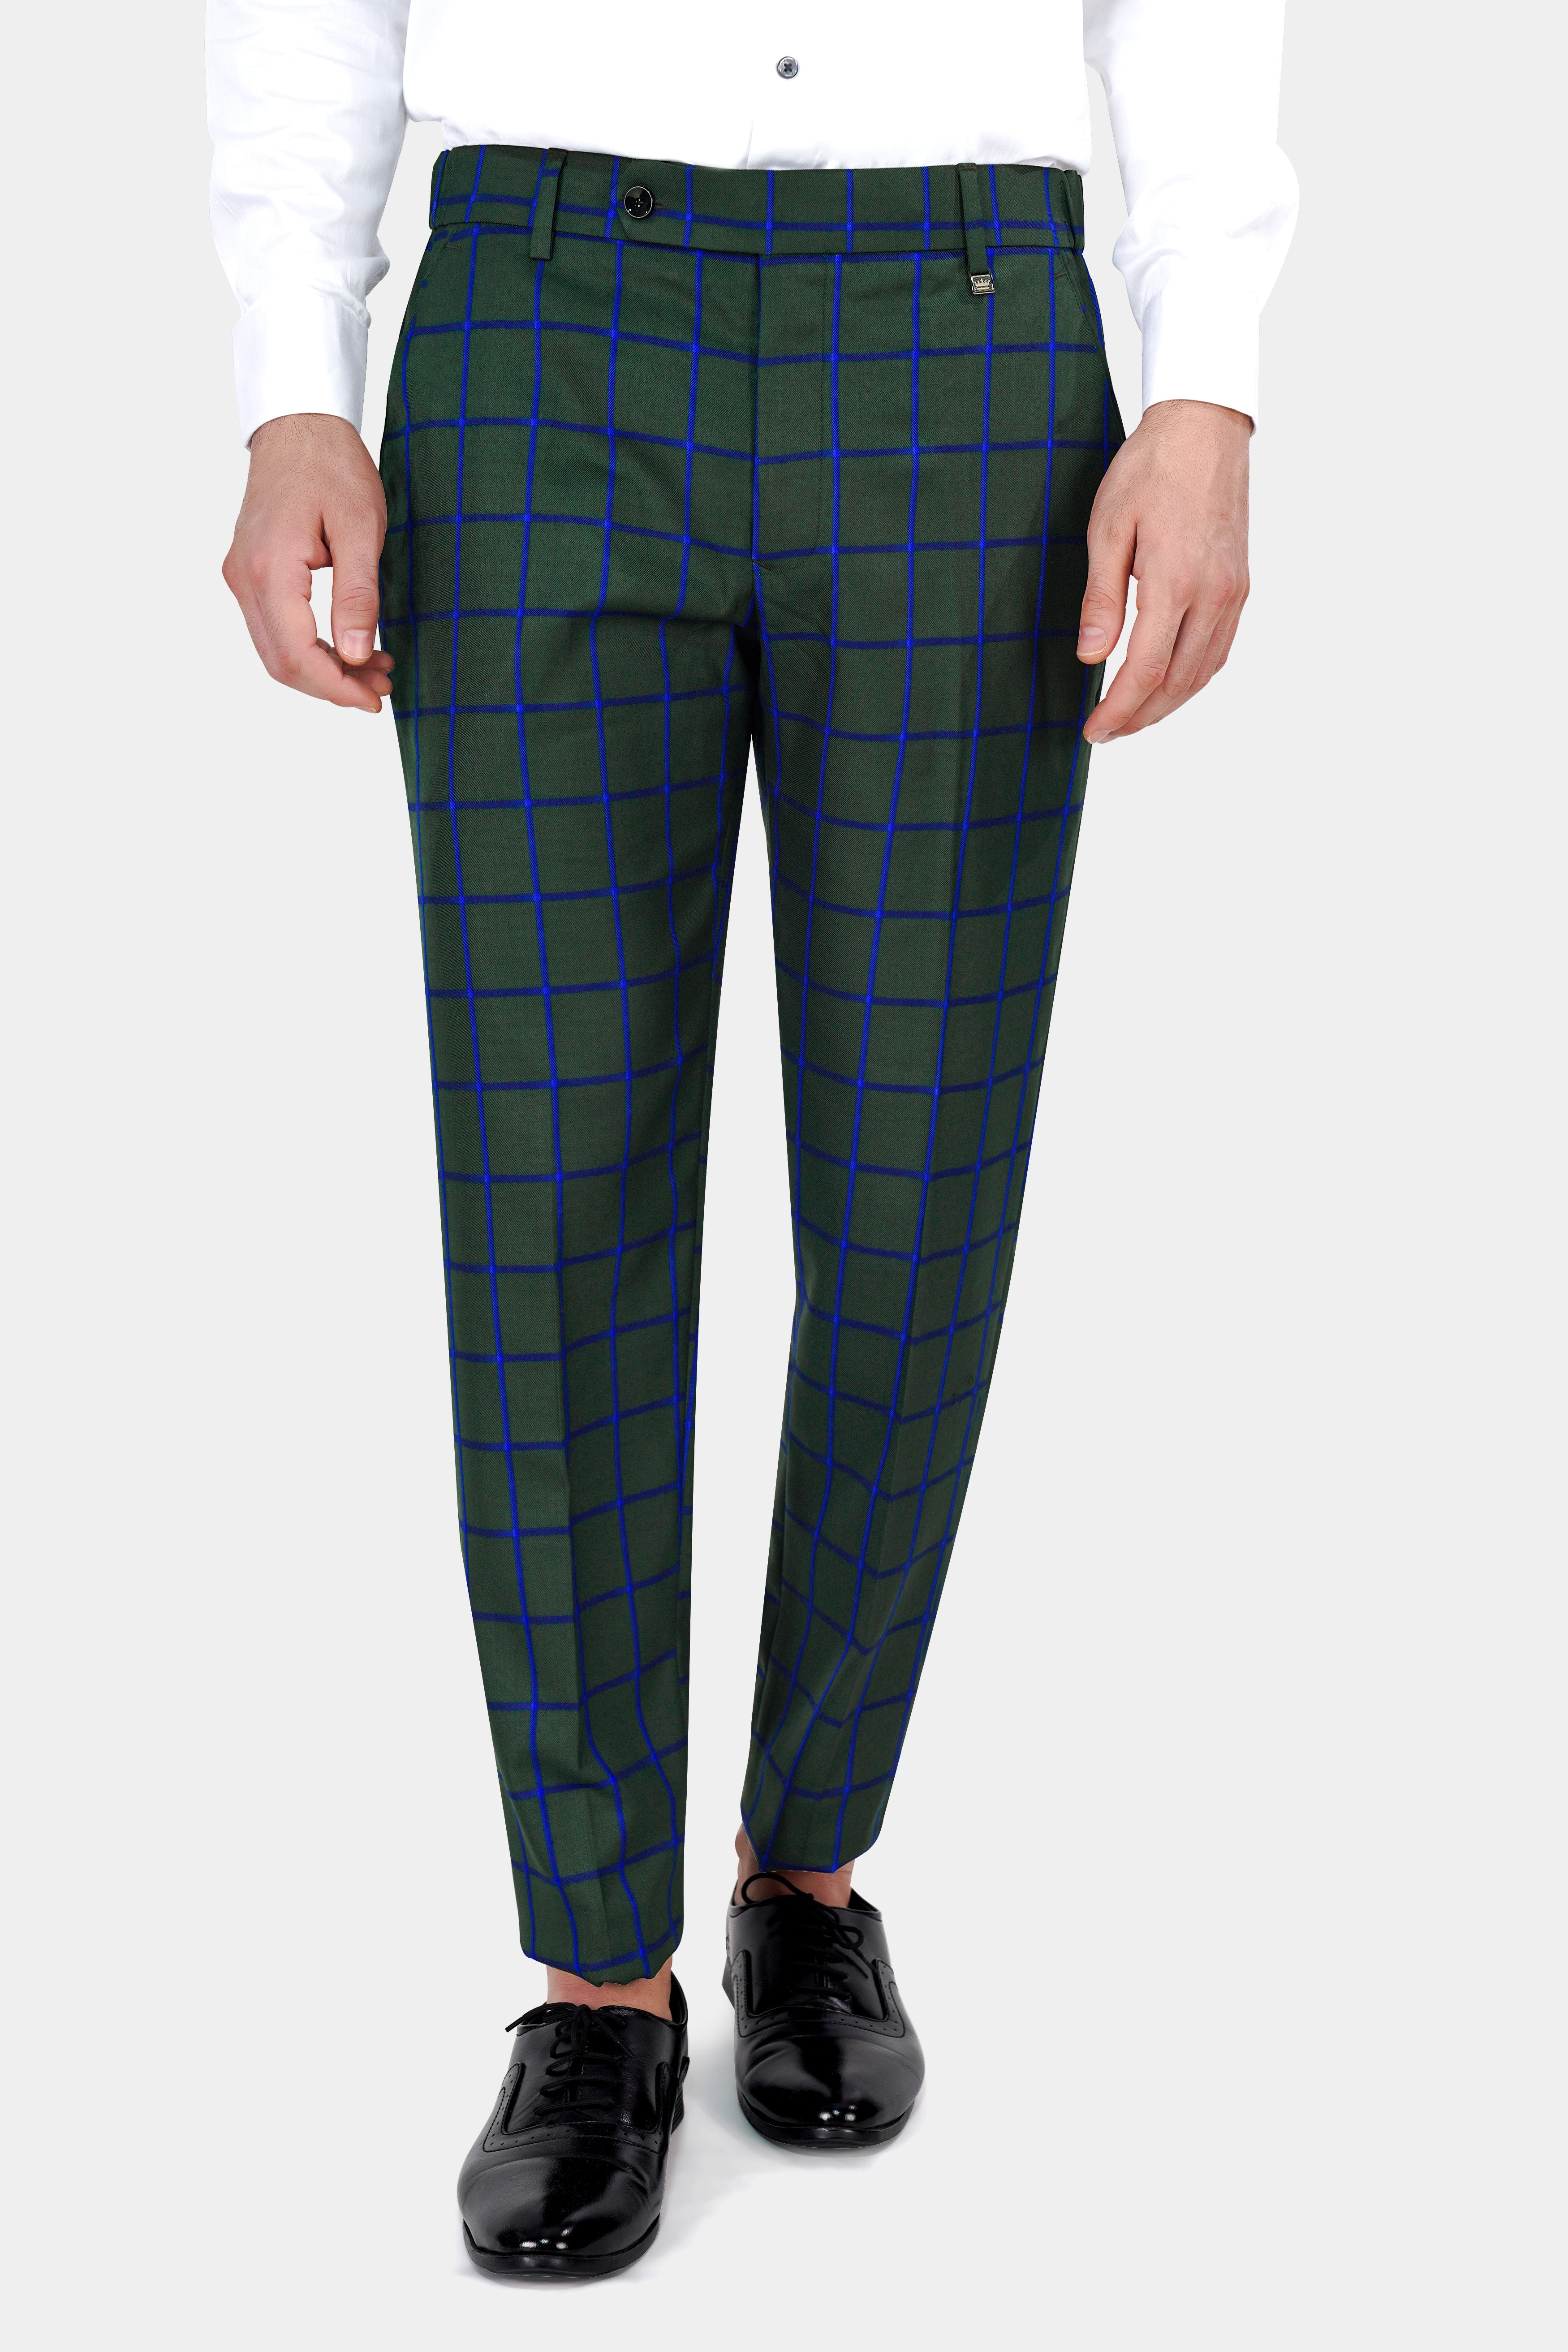 Mens Slim Fit Skinny Pencil Pants Plaid Business Formal Dress Casual  Trousers | eBay